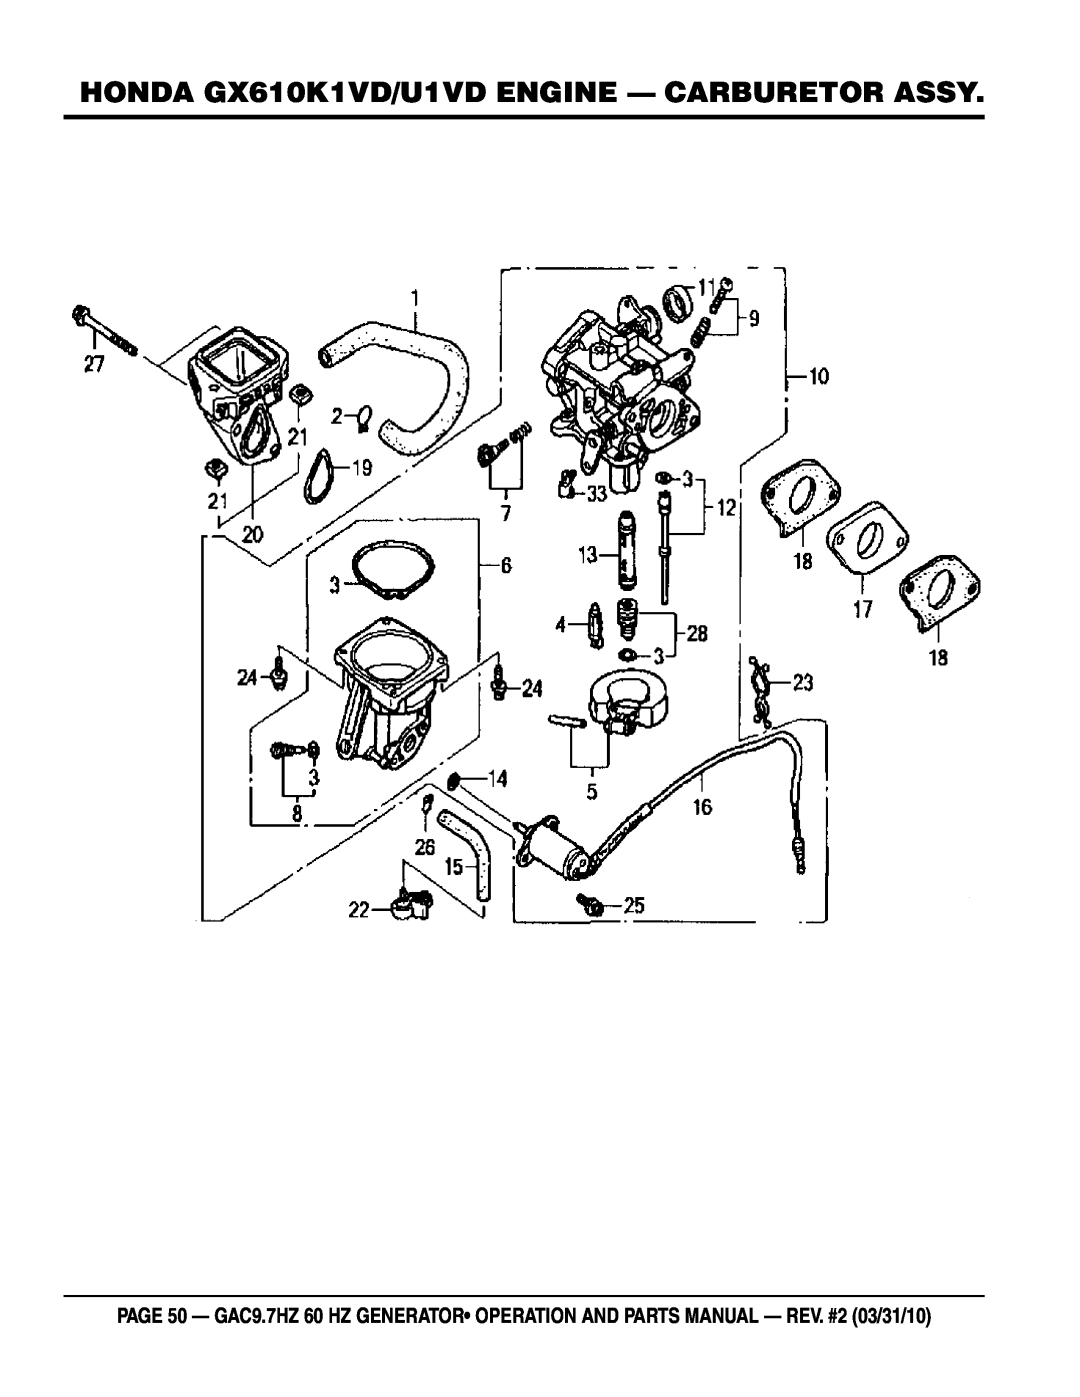 Multiquip GAC-9.7HZ manual HONDA GX610K1VD/U1VD ENGINE - CARBURETOR ASSY 